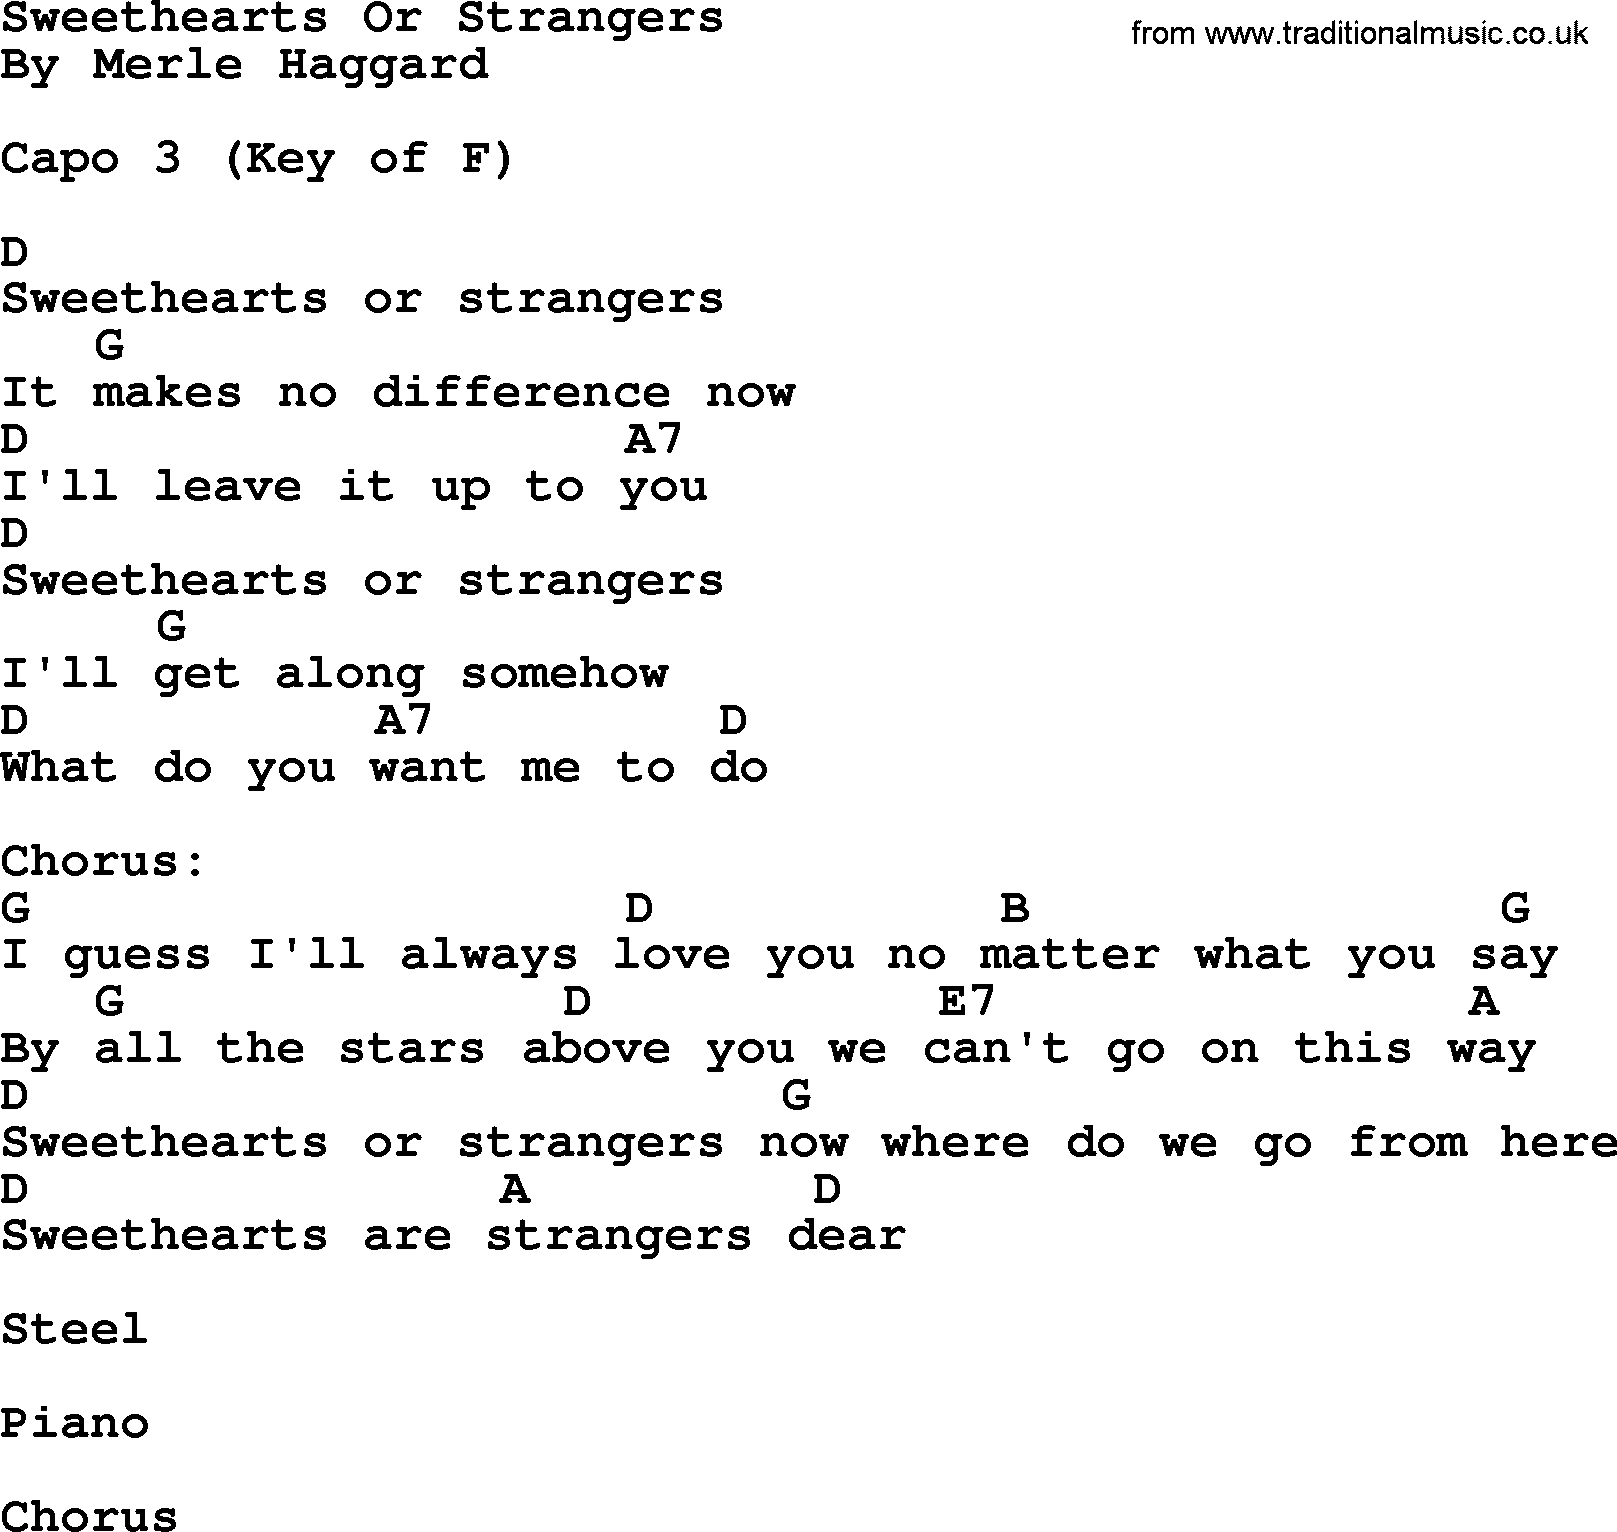 Merle Haggard song: Sweethearts Or Strangers, lyrics and chords